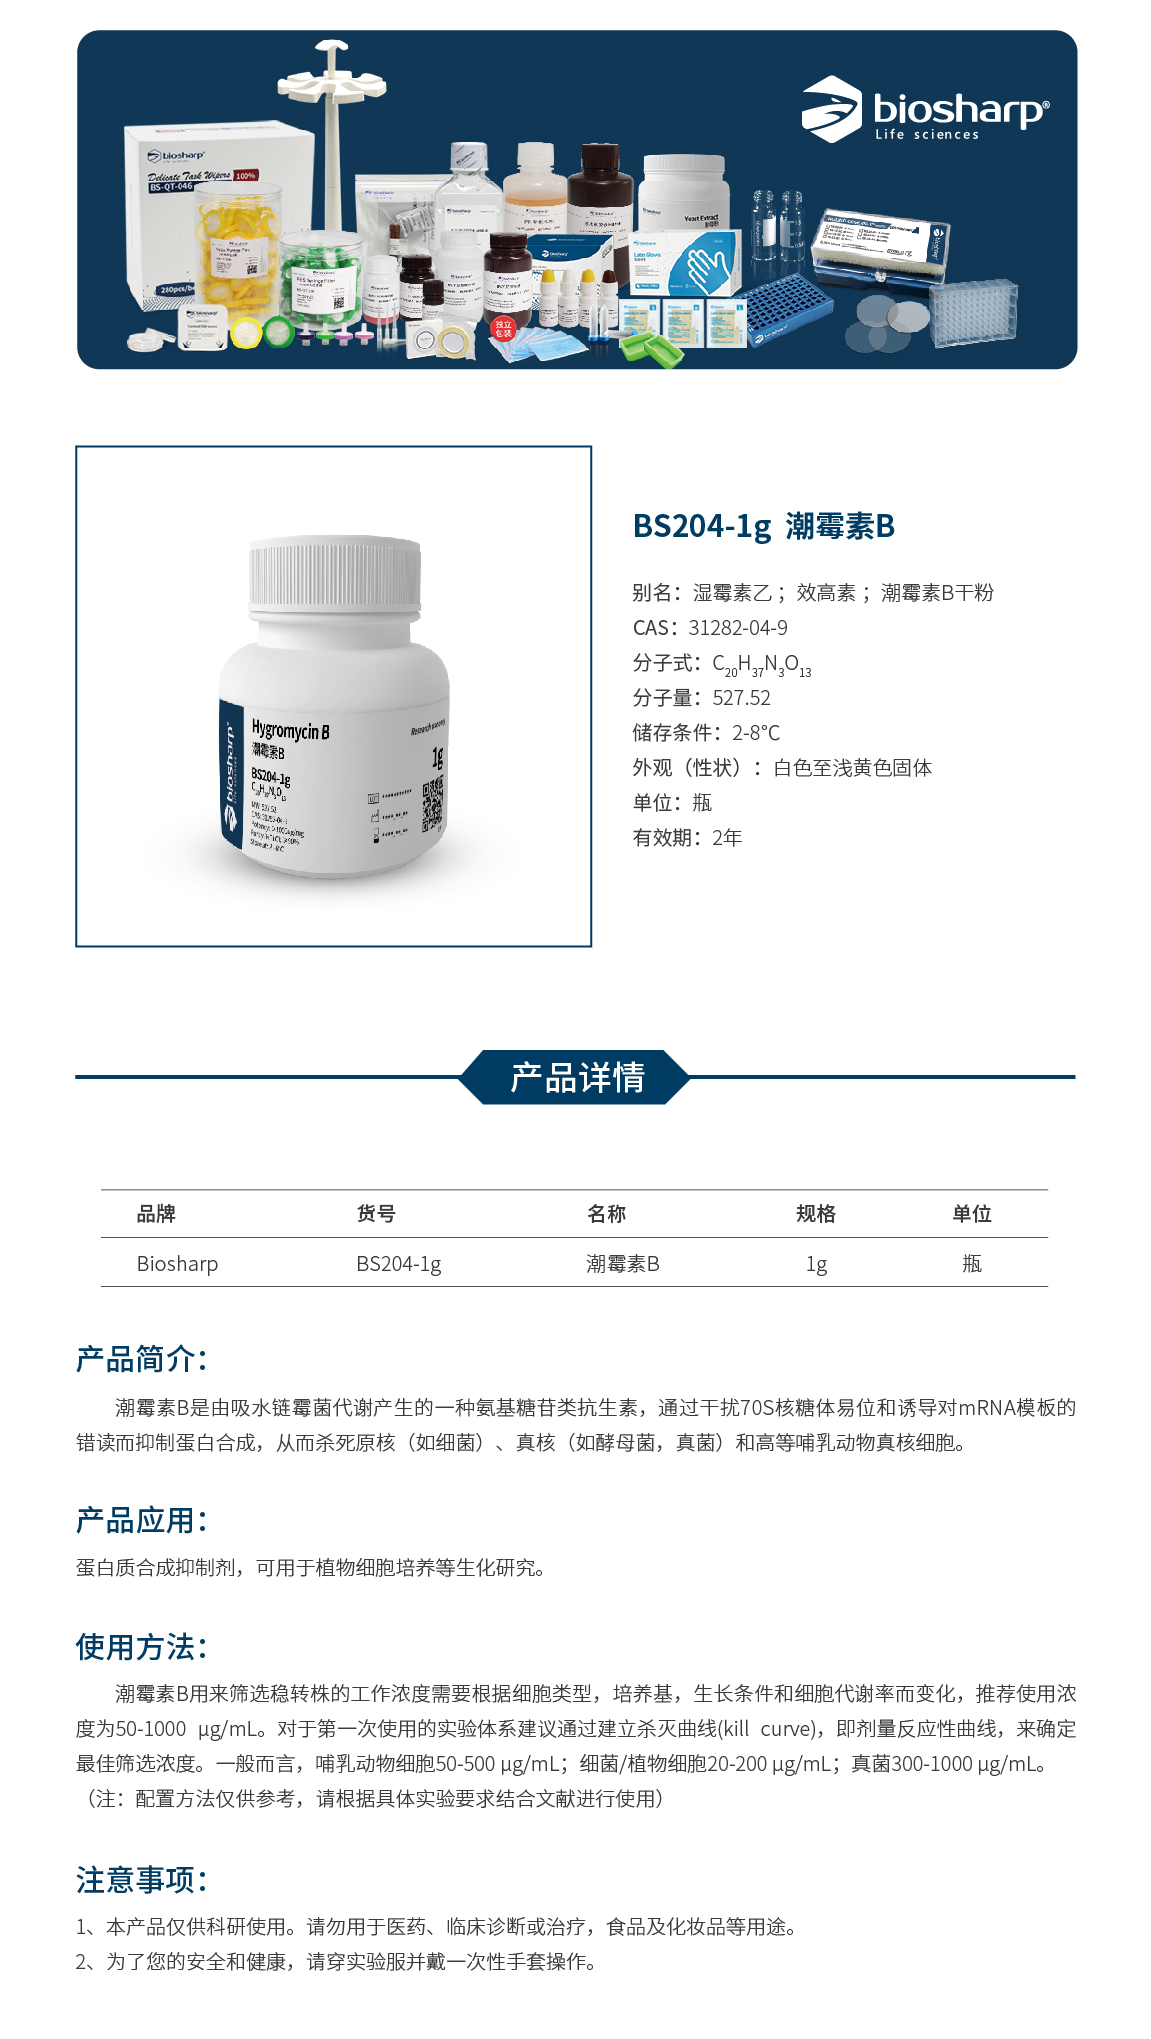 Biosharp BS204-1g 潮霉素B/Hygromycin B 科邦邦